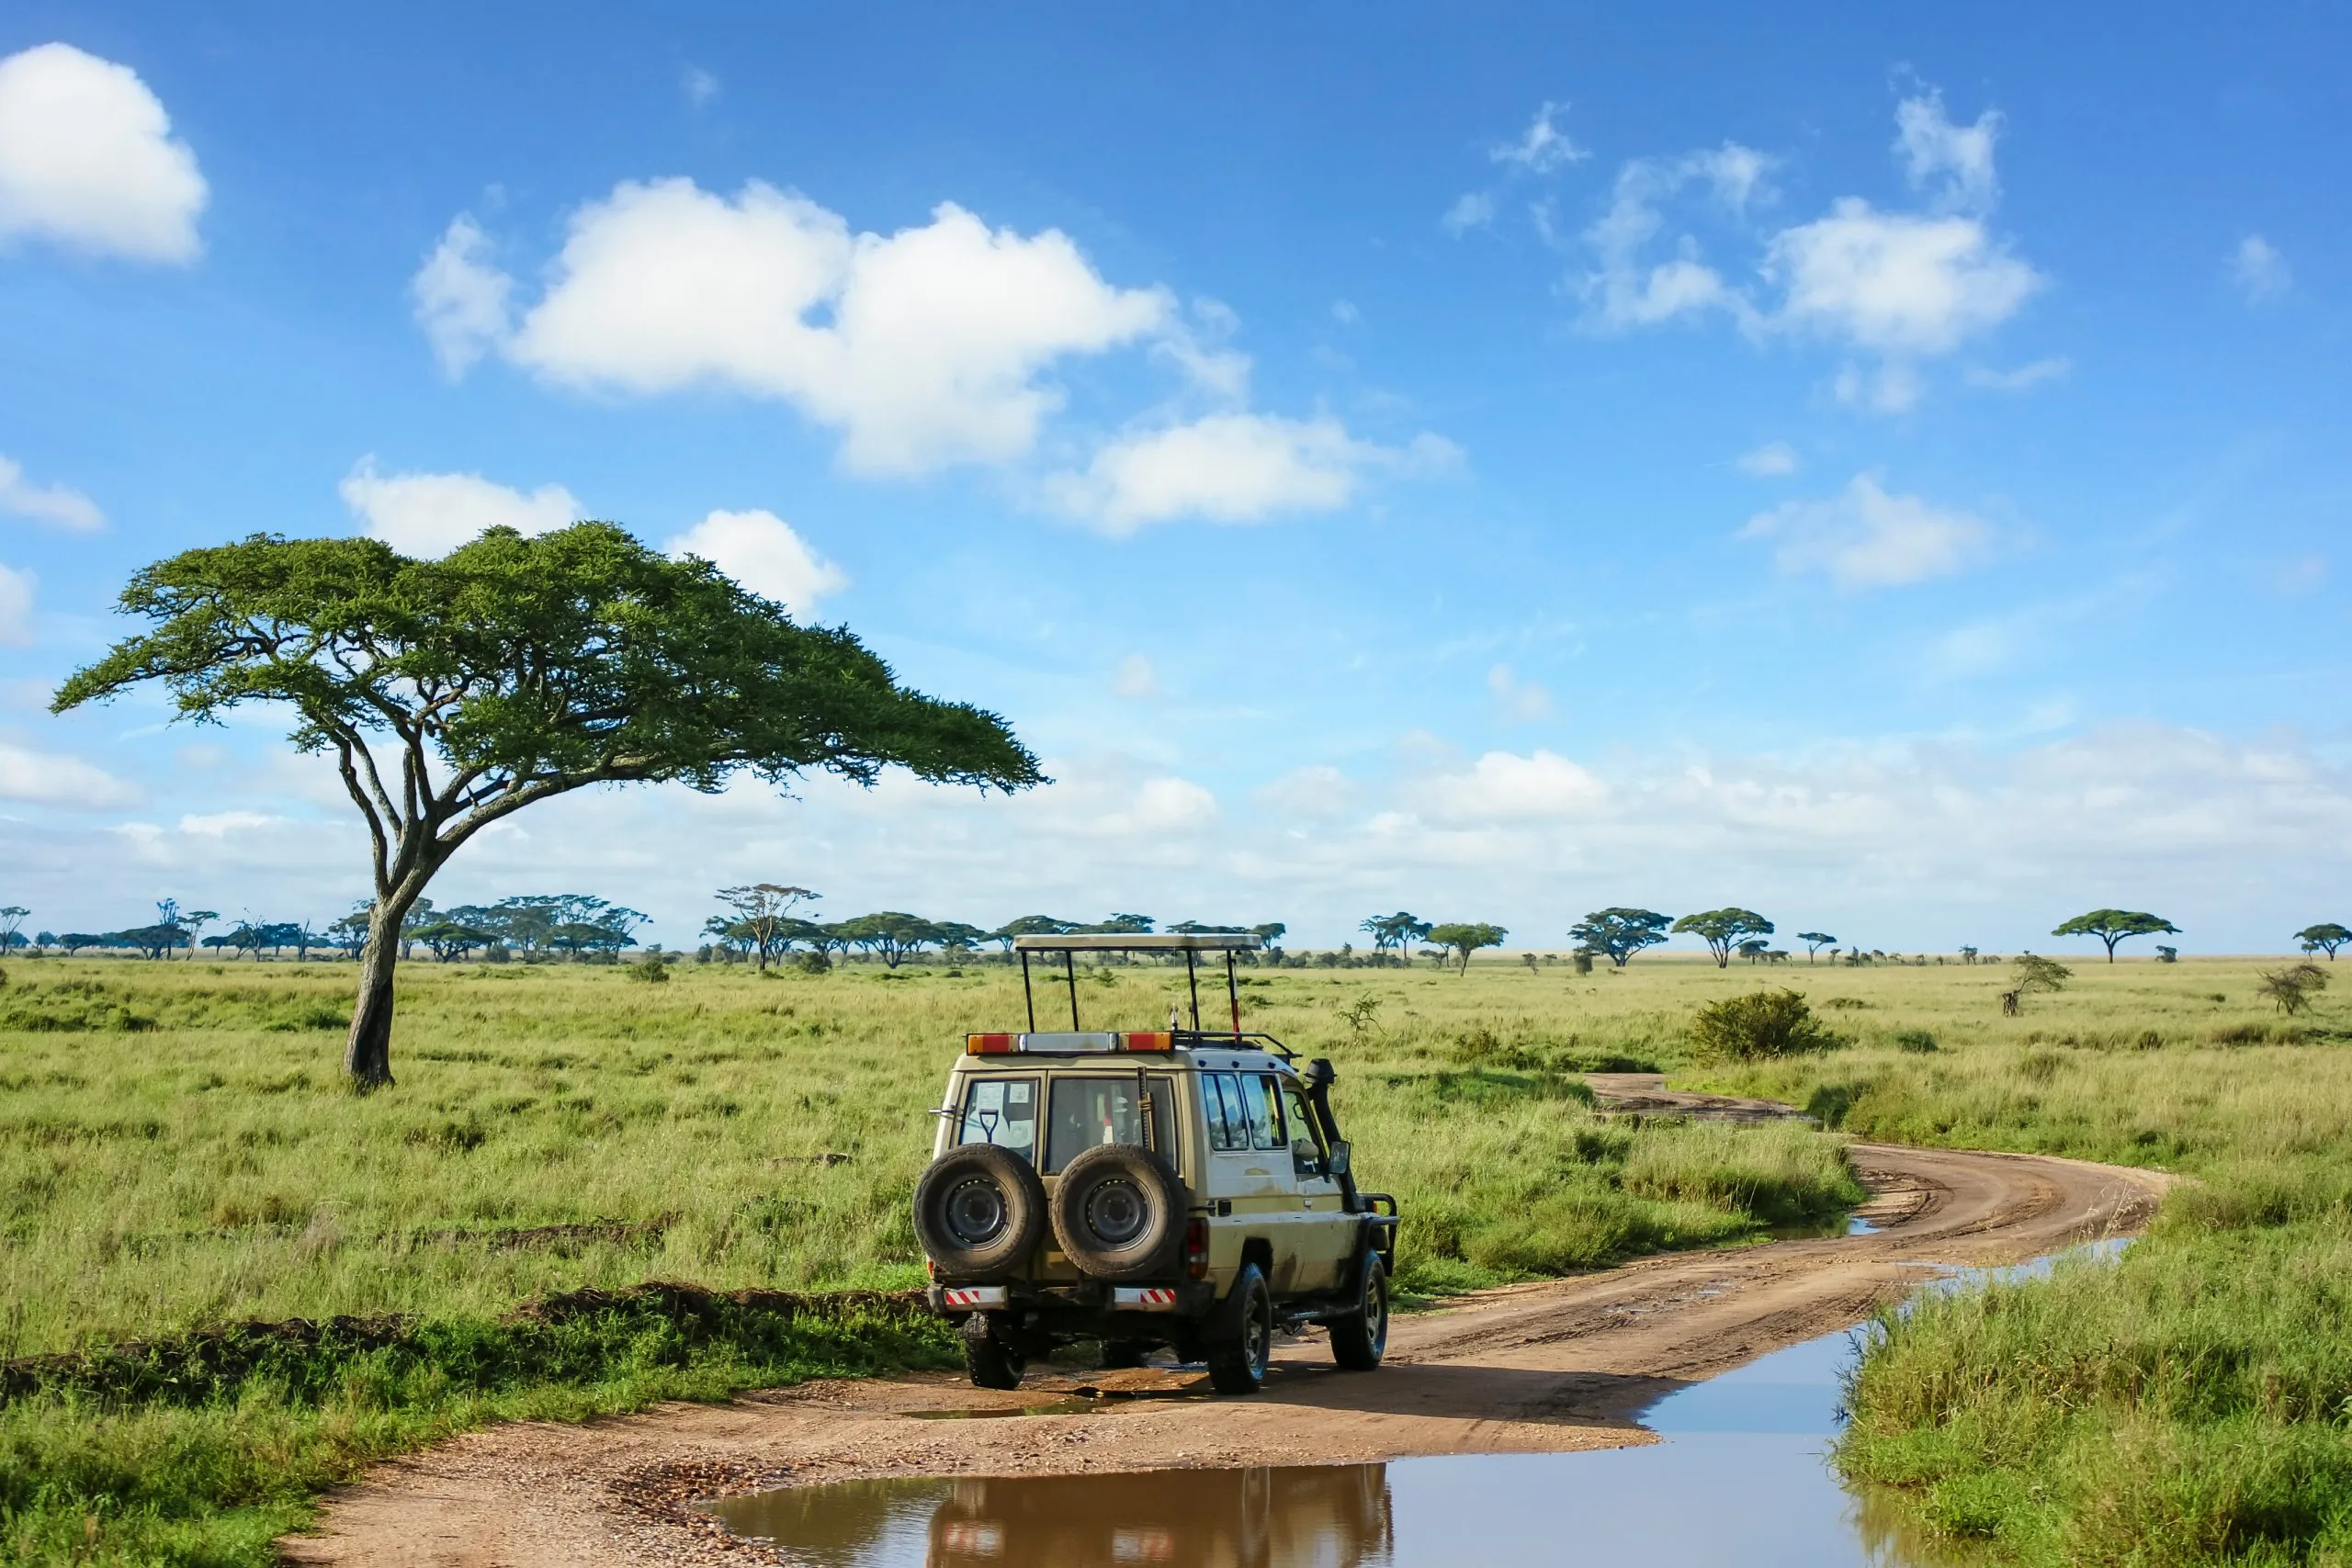 Paisaje de safari en la pradera del Serengeti